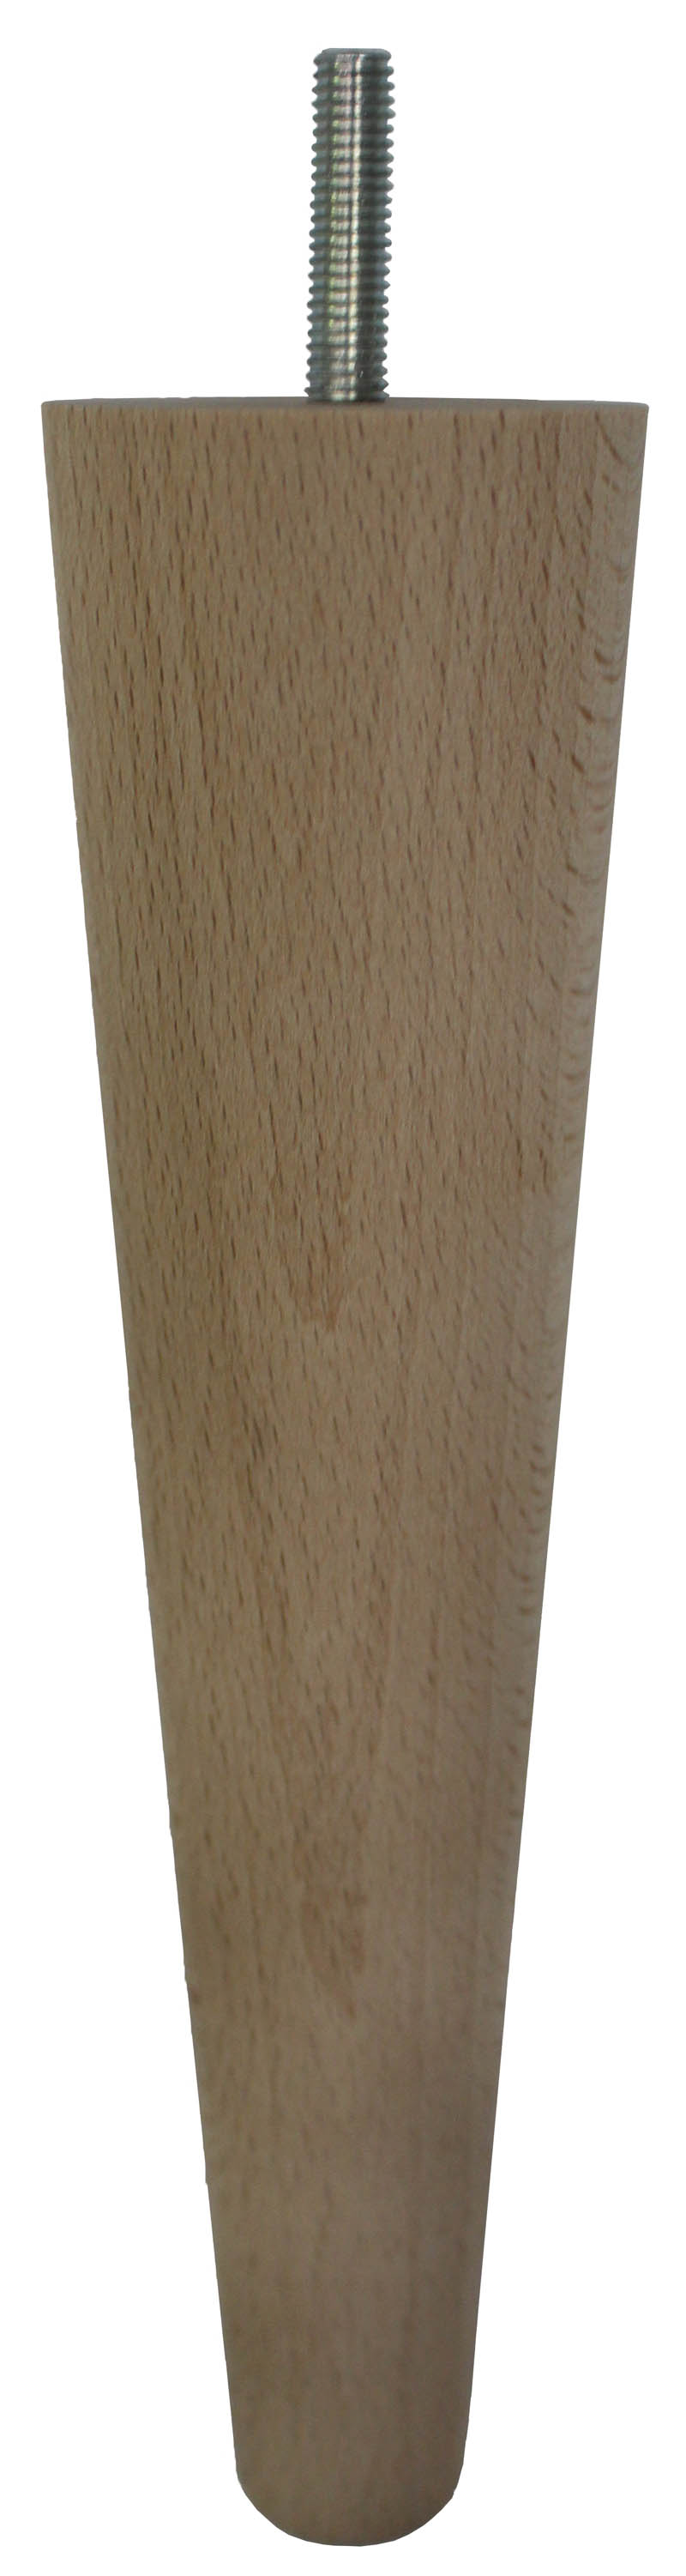 Genesis Tall Wooden Furniture Legs - Raw Finish - Set of 4